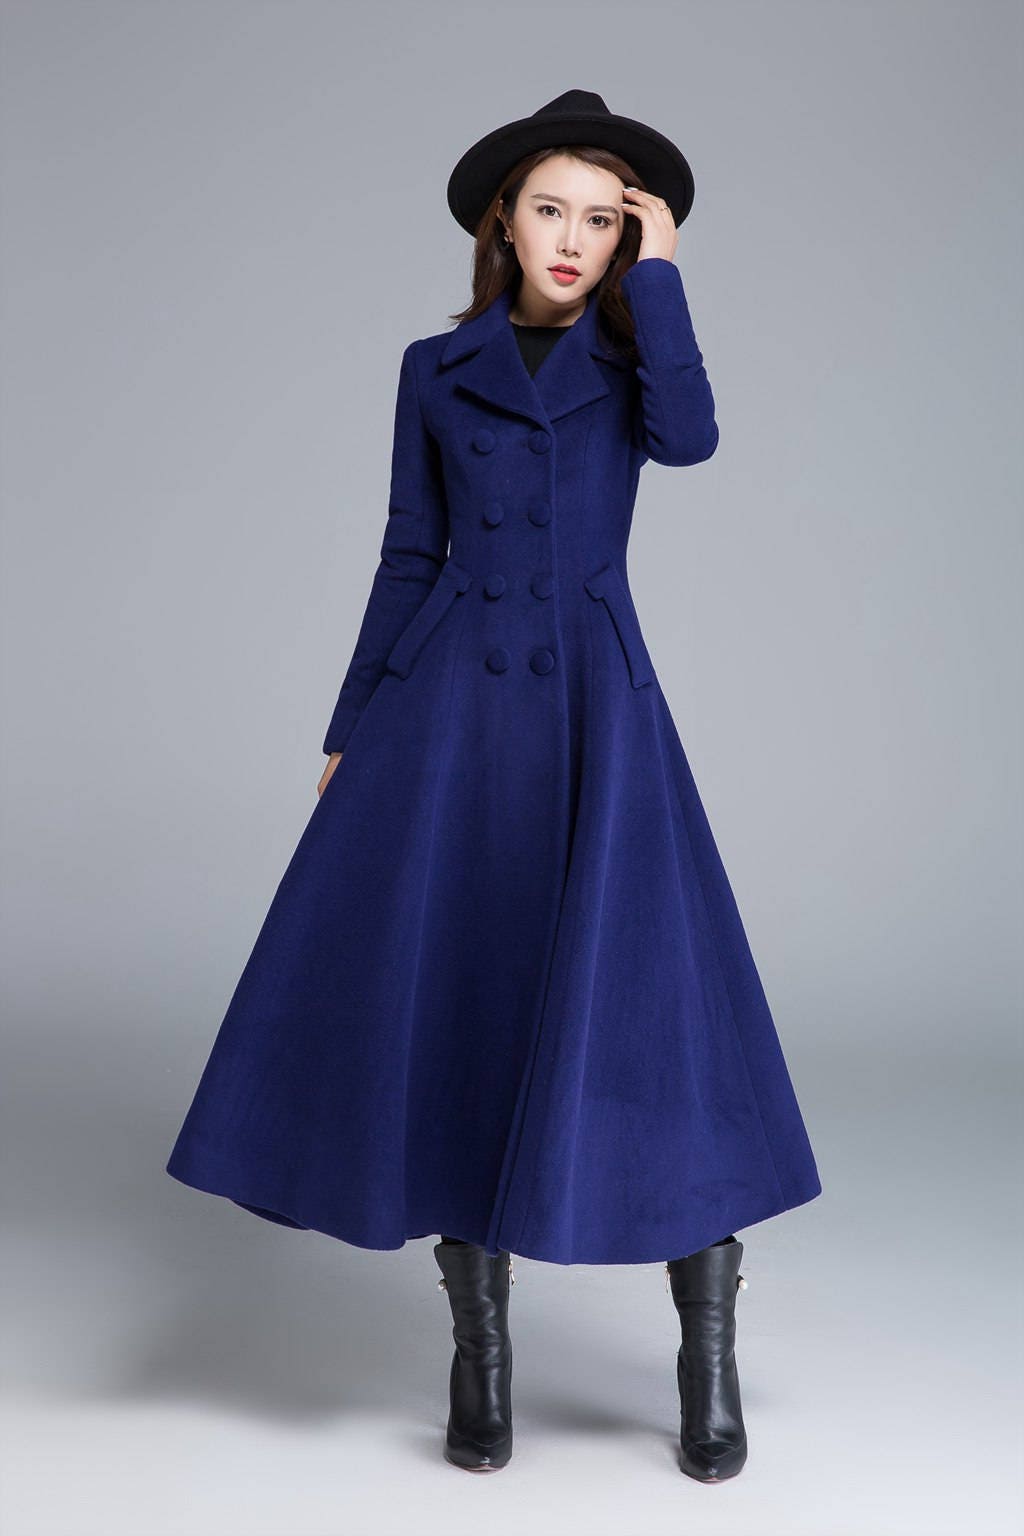 Long wool coat blue coat wool coat winter coat pleated | Etsy